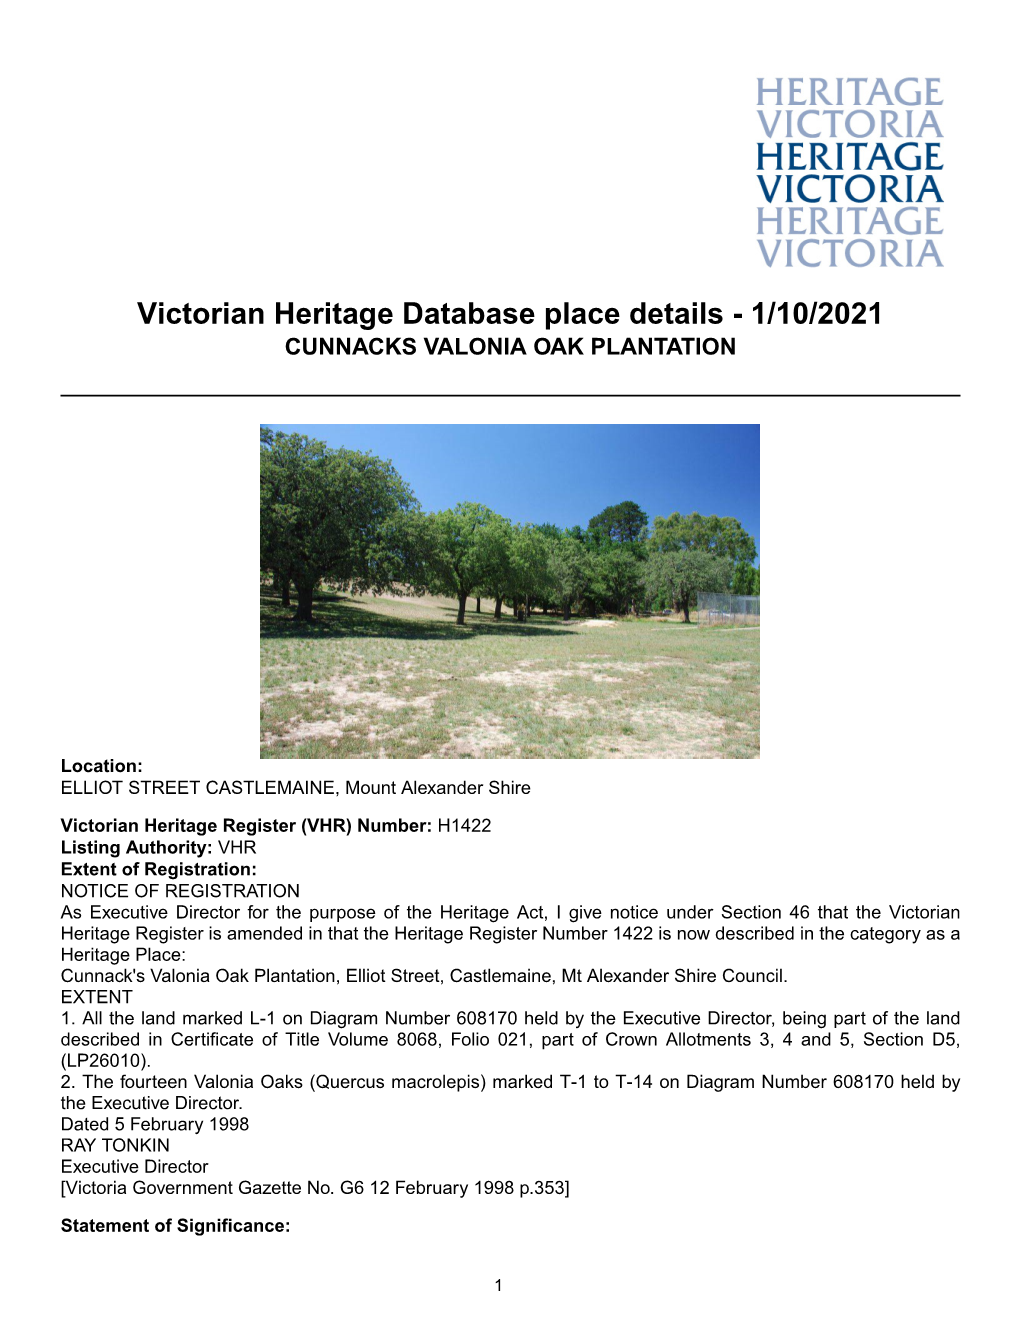 Victorian Heritage Database Place Details - 1/10/2021 CUNNACKS VALONIA OAK PLANTATION